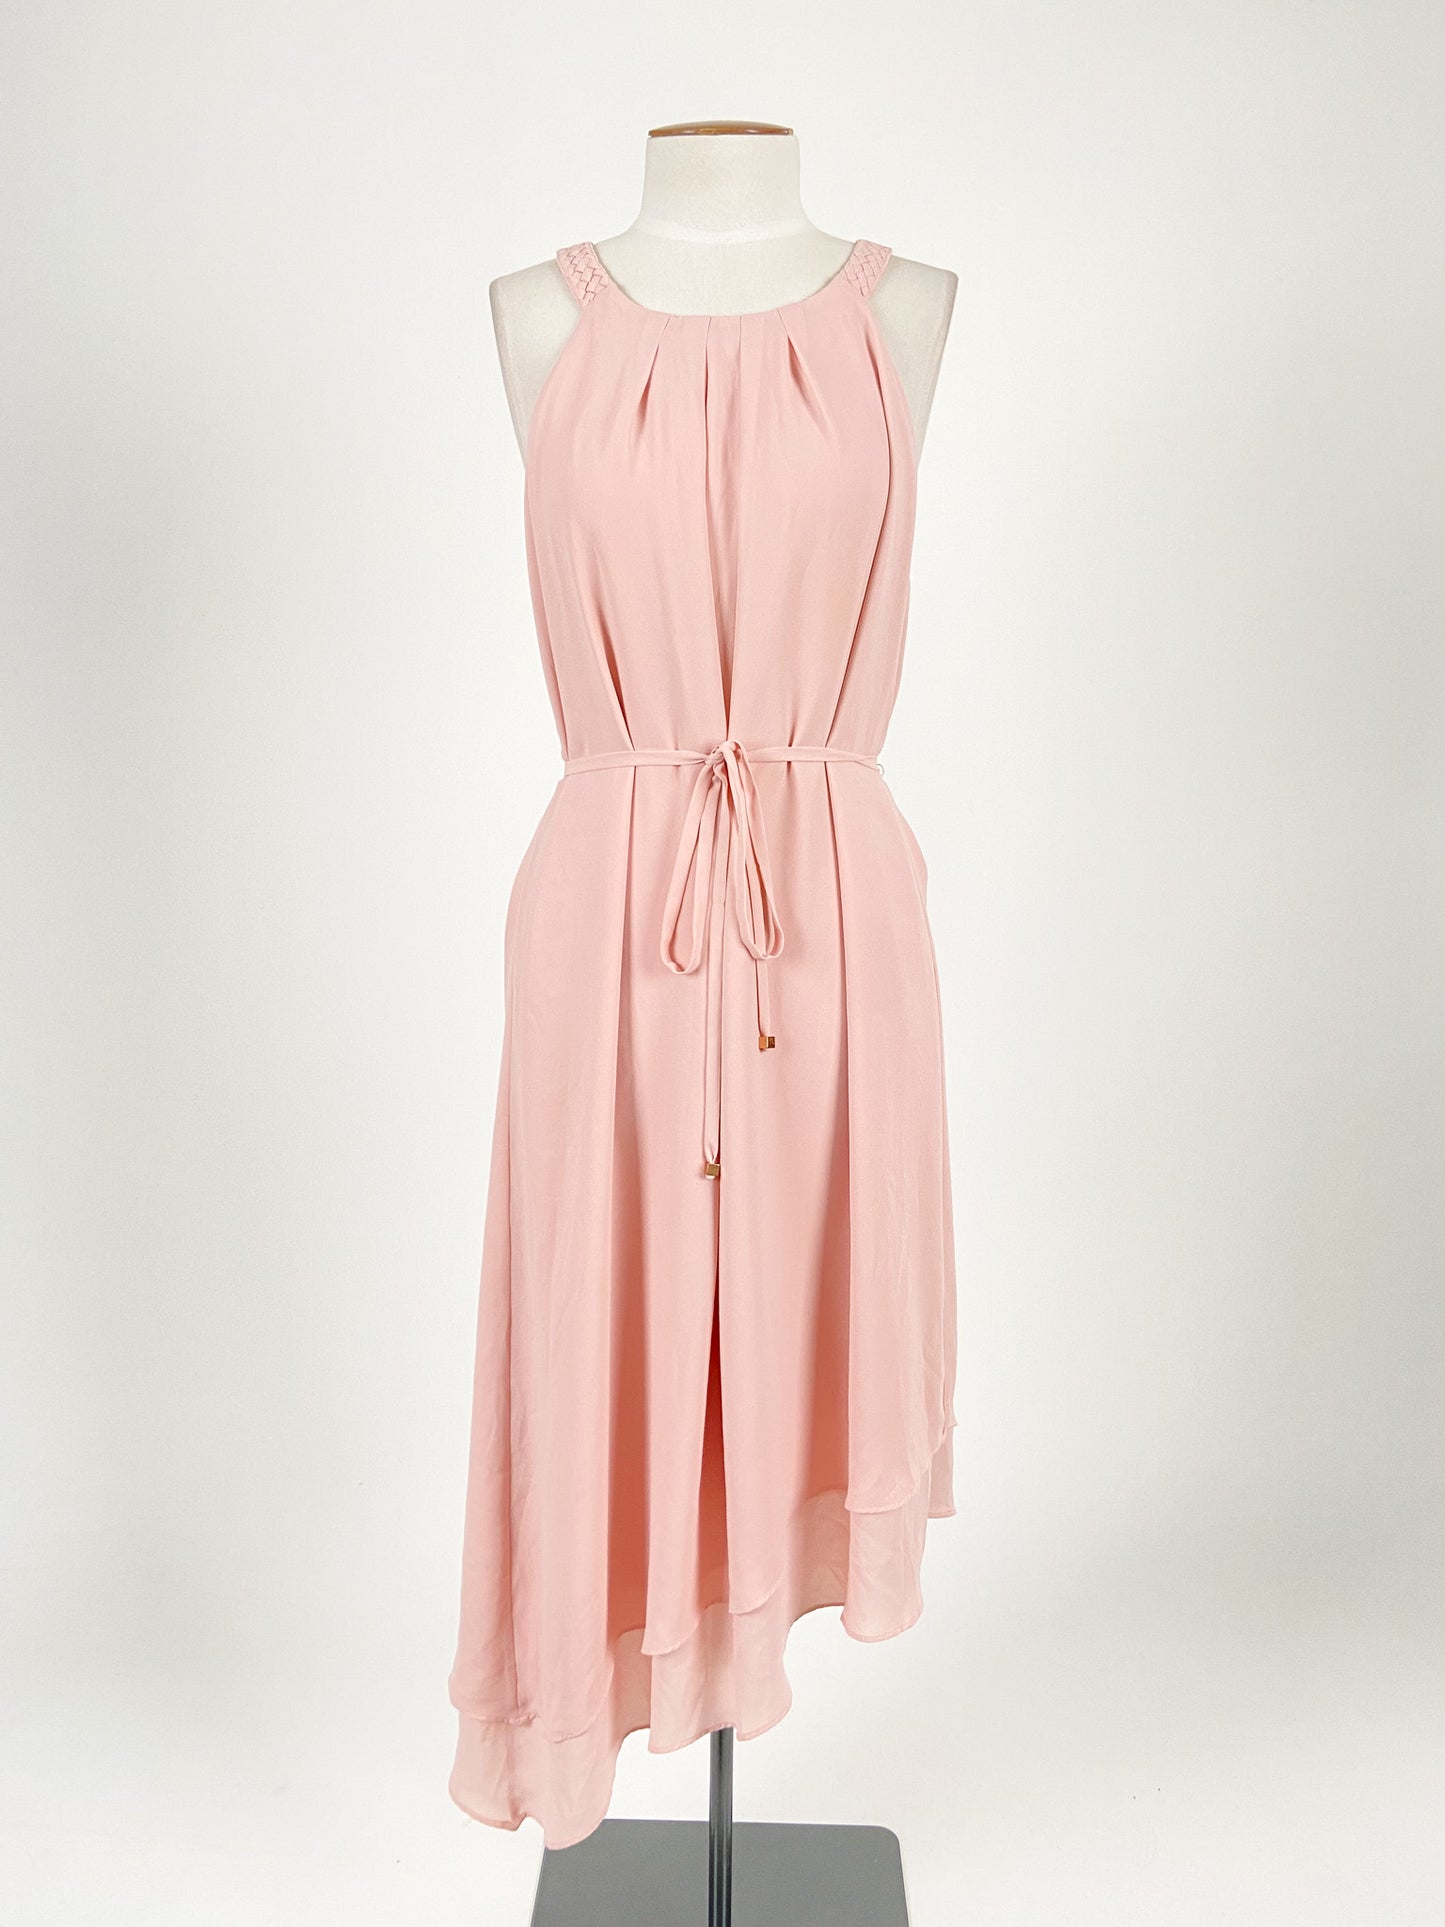 Harlow | Pink Cocktail/Formal Dress | Size 12